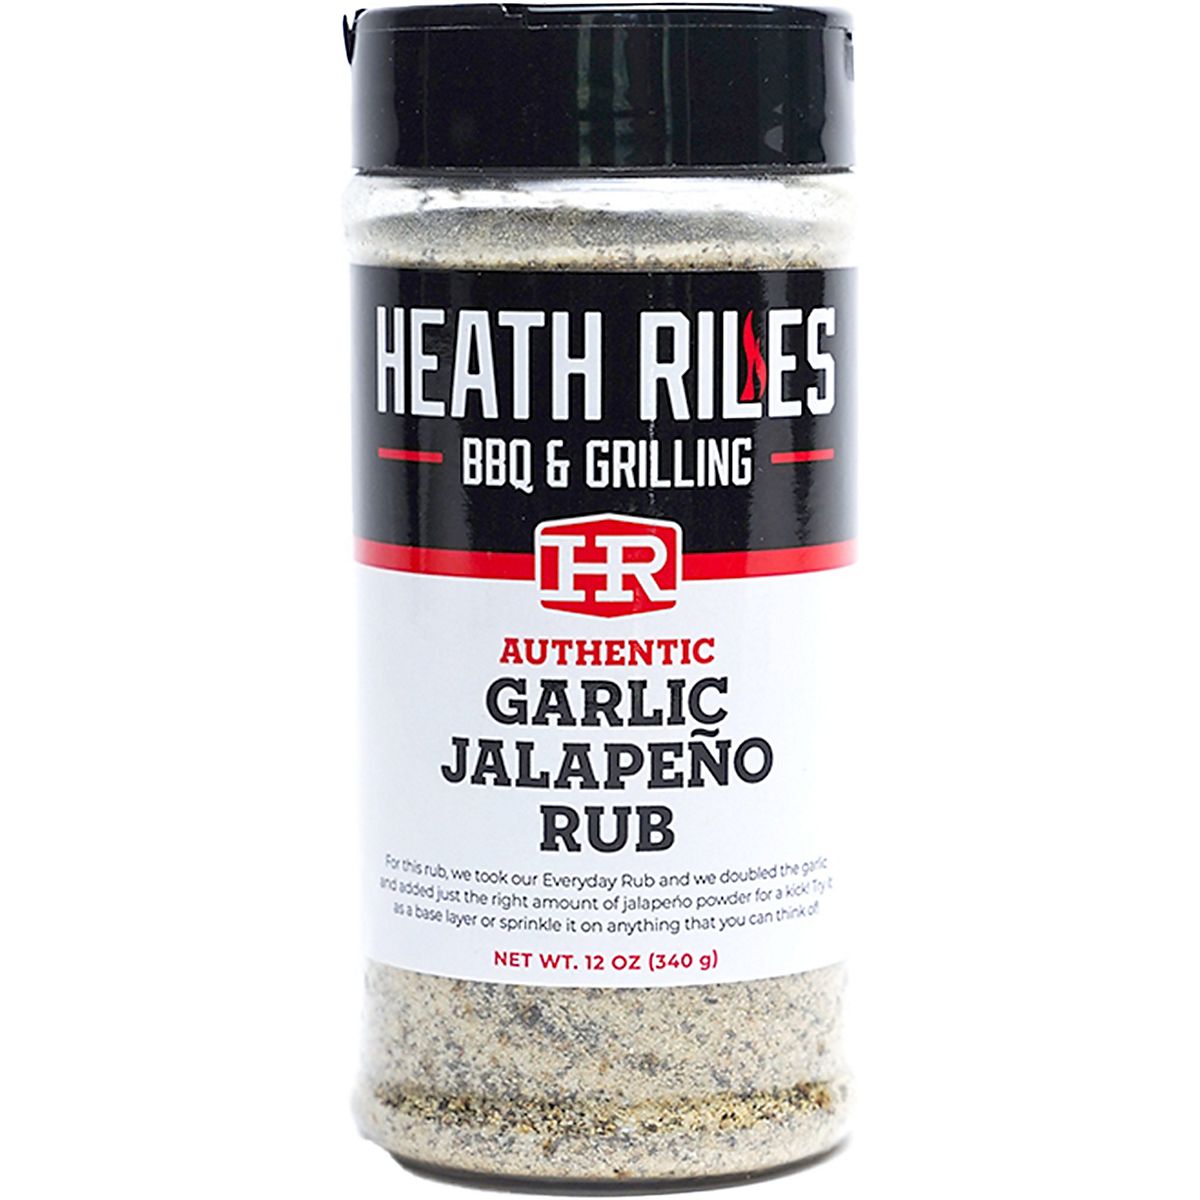 Heath Rile Garlic Jalapeno Rub Shaker, 16 oz. - Pellet Grills Galore